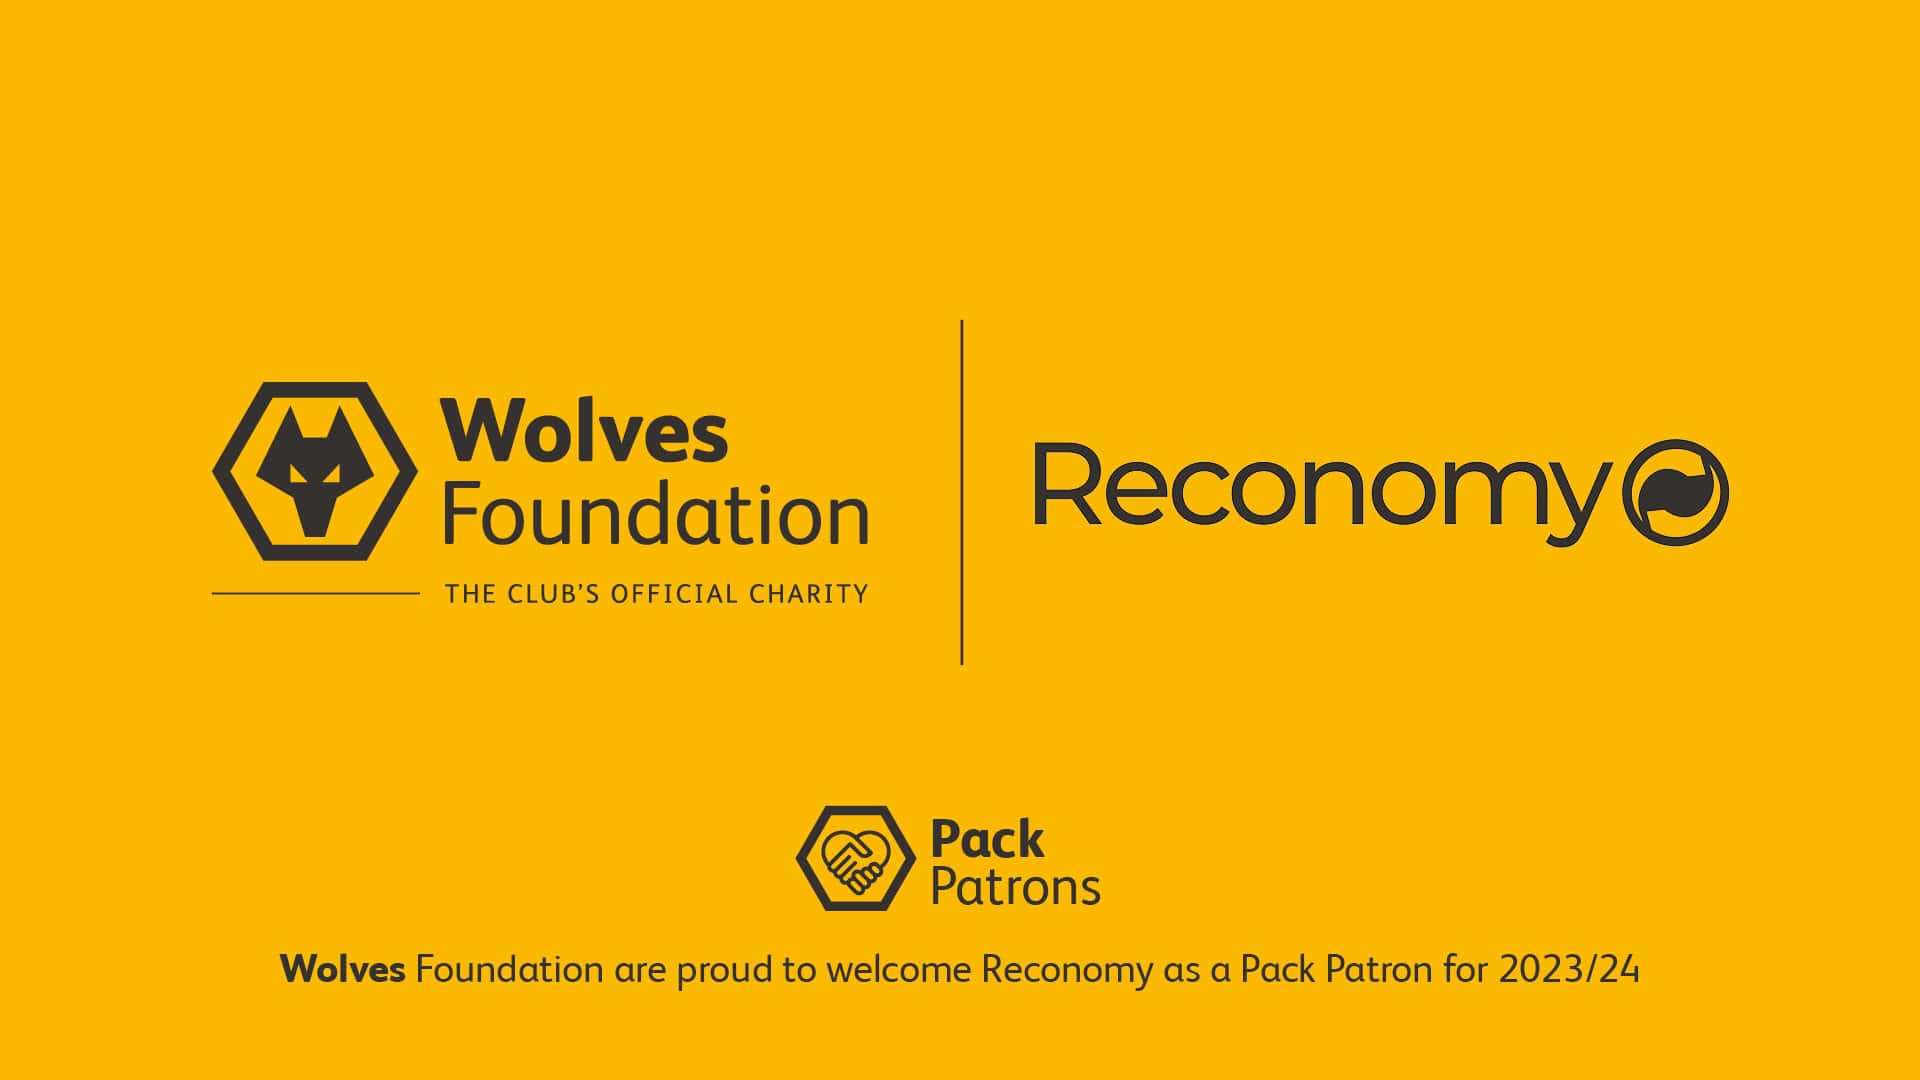 Wolves and Foundation extend Reconomy sustainability partnership Image